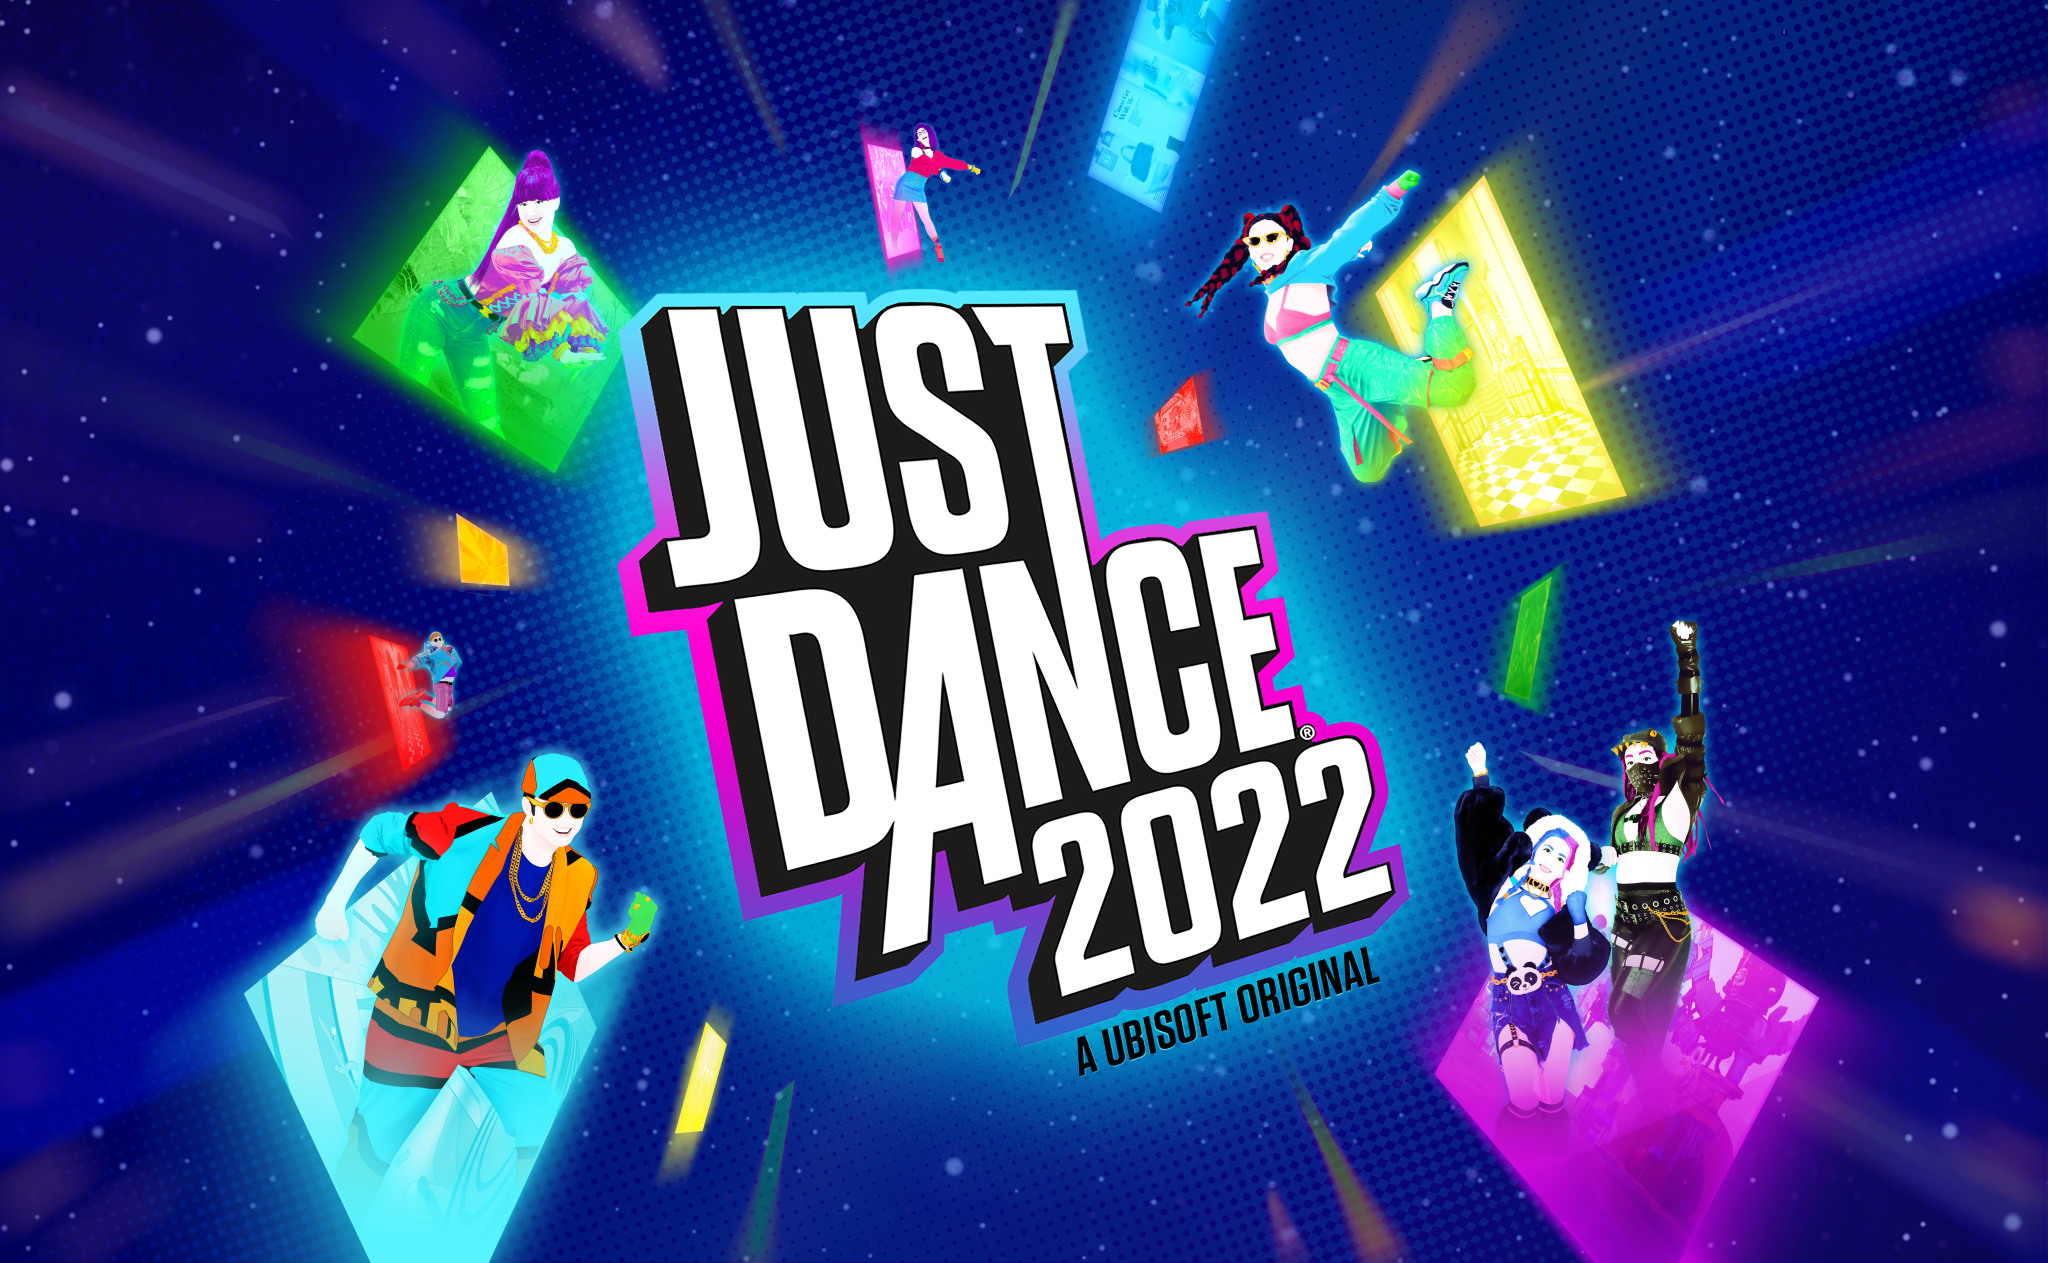 Just Dance 2022 Confirmed for November Japanese Release